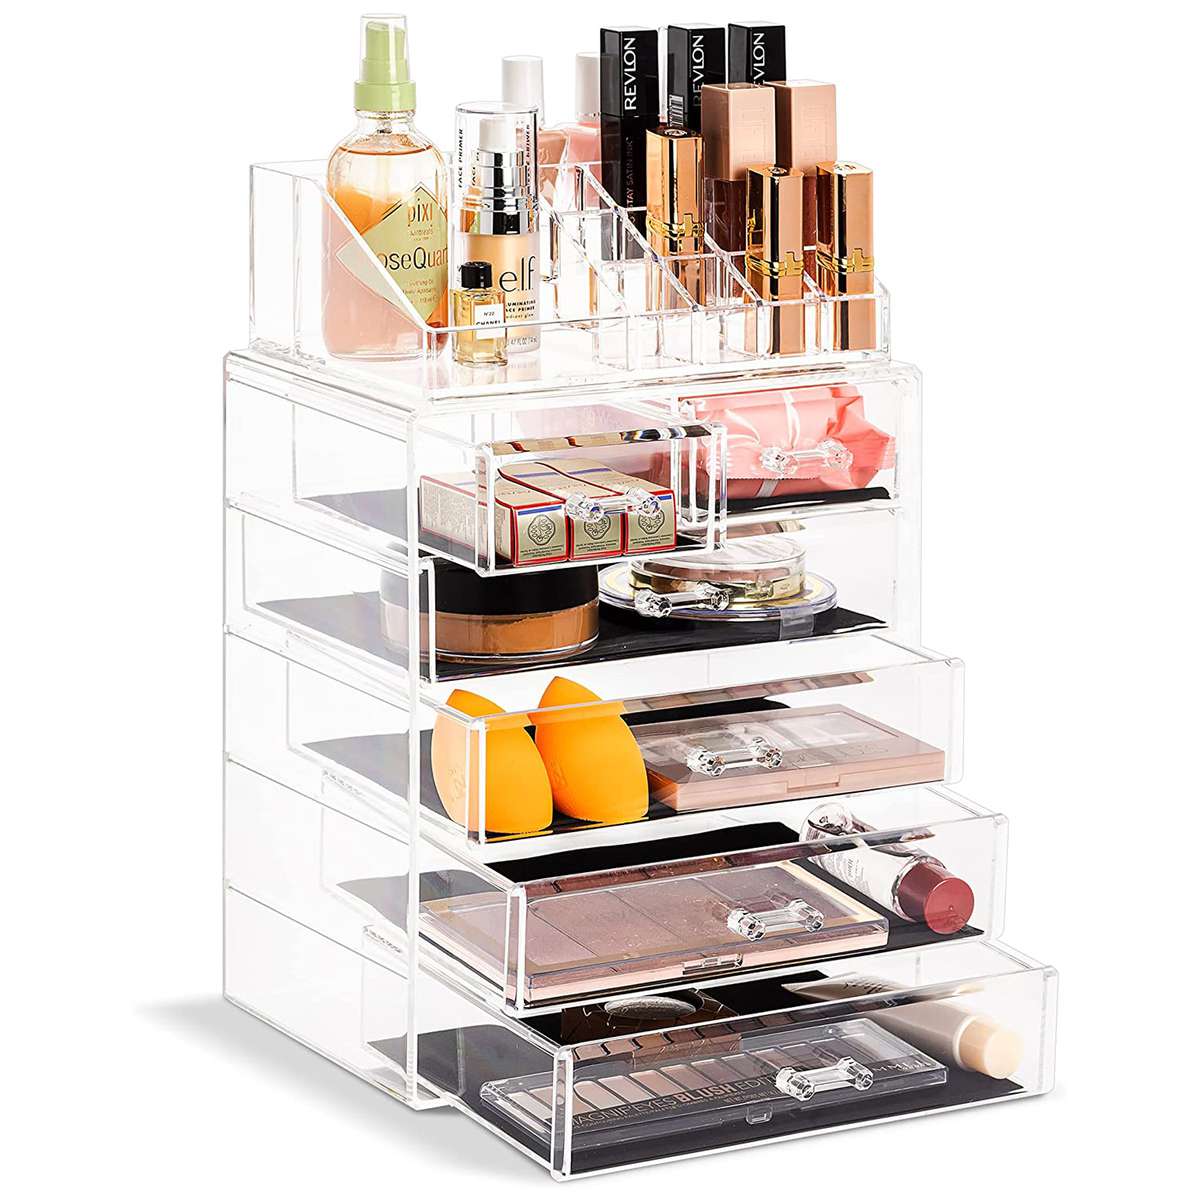 Makeup Storage Organization Review